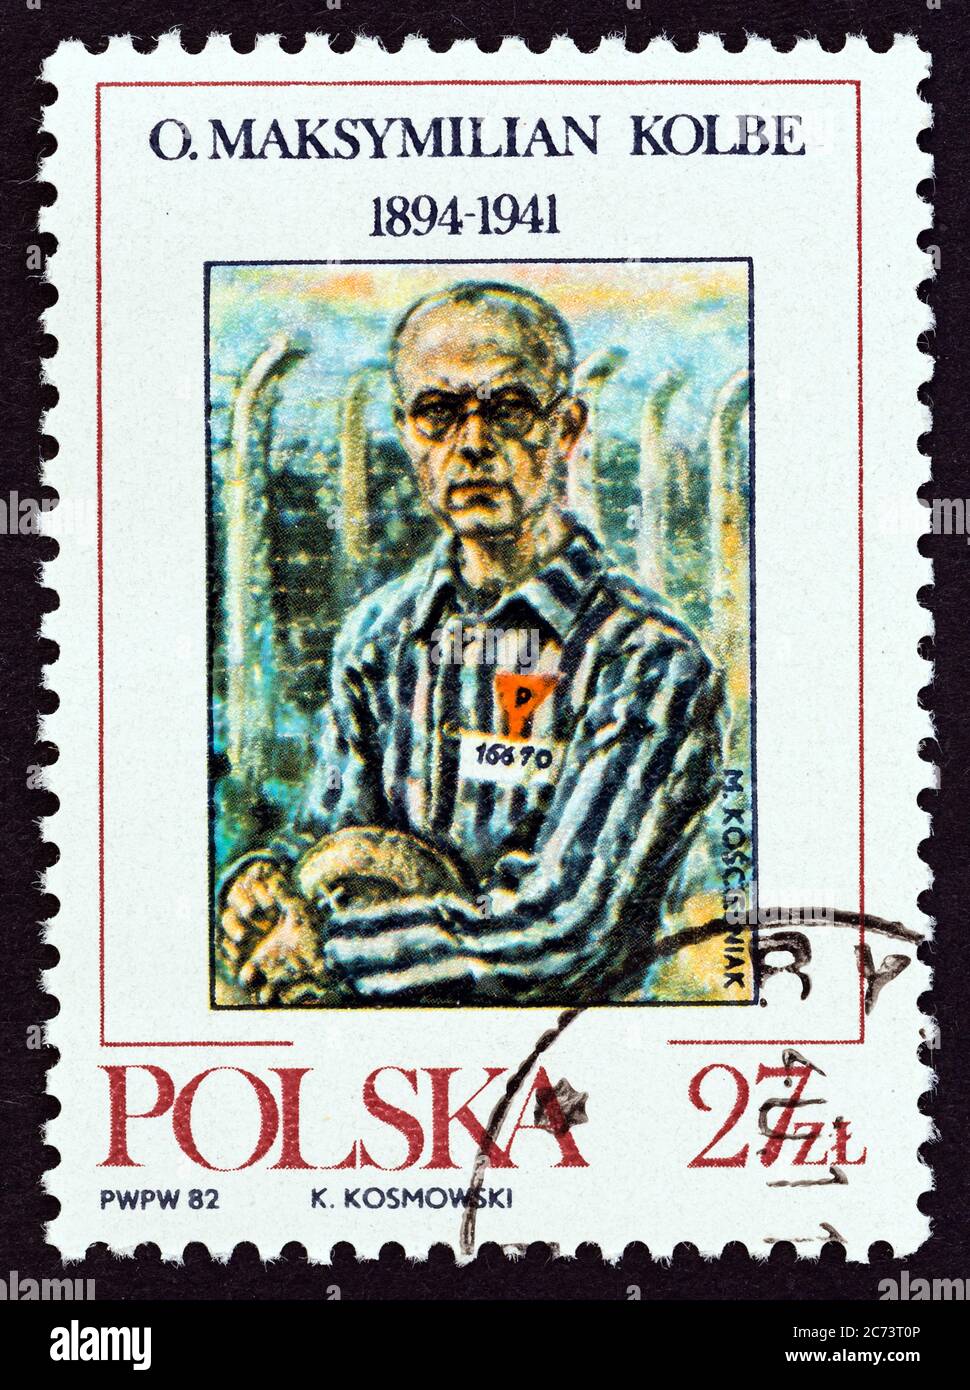 POLAND - CIRCA 1982: A stamp printed in Poland shows Maximilian Kolbe (after M. Koscielniak), circa 1982. Stock Photo